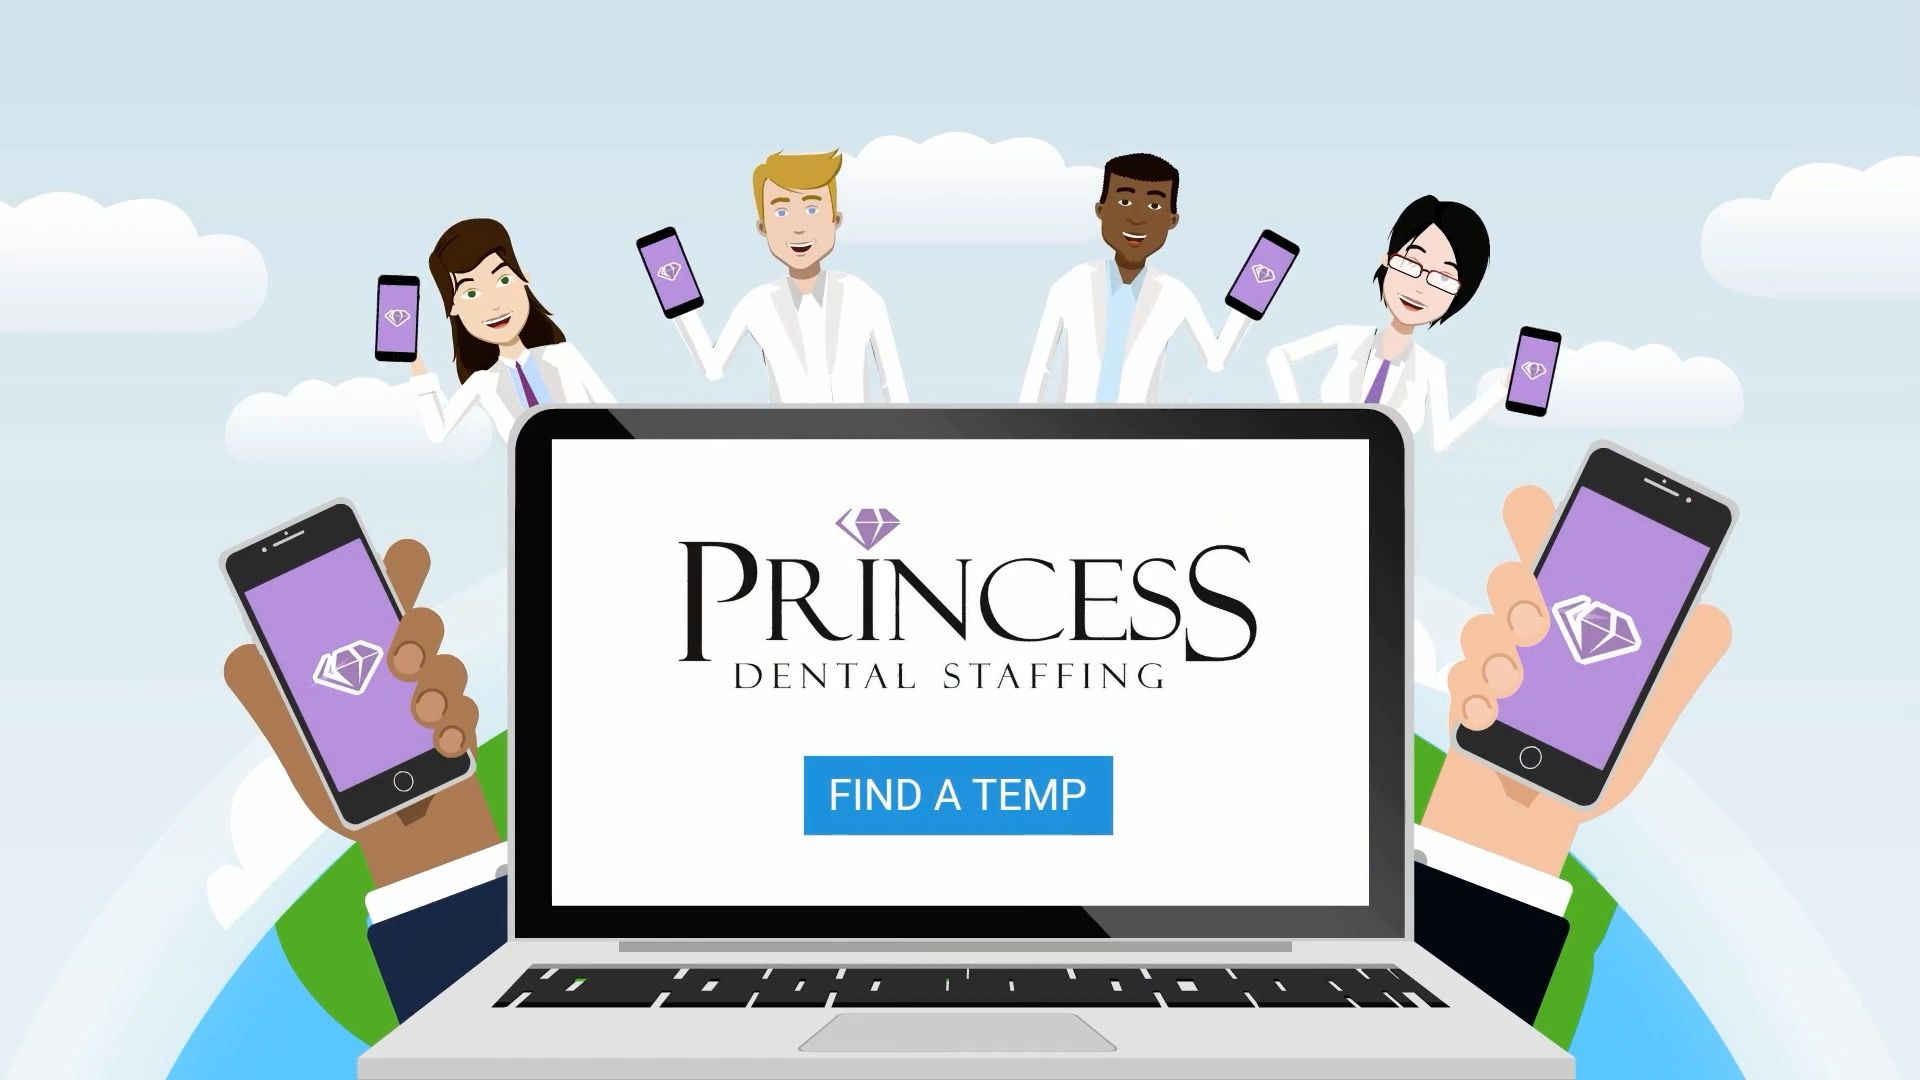 Find temporary dental staff using Princess Dental Staffing